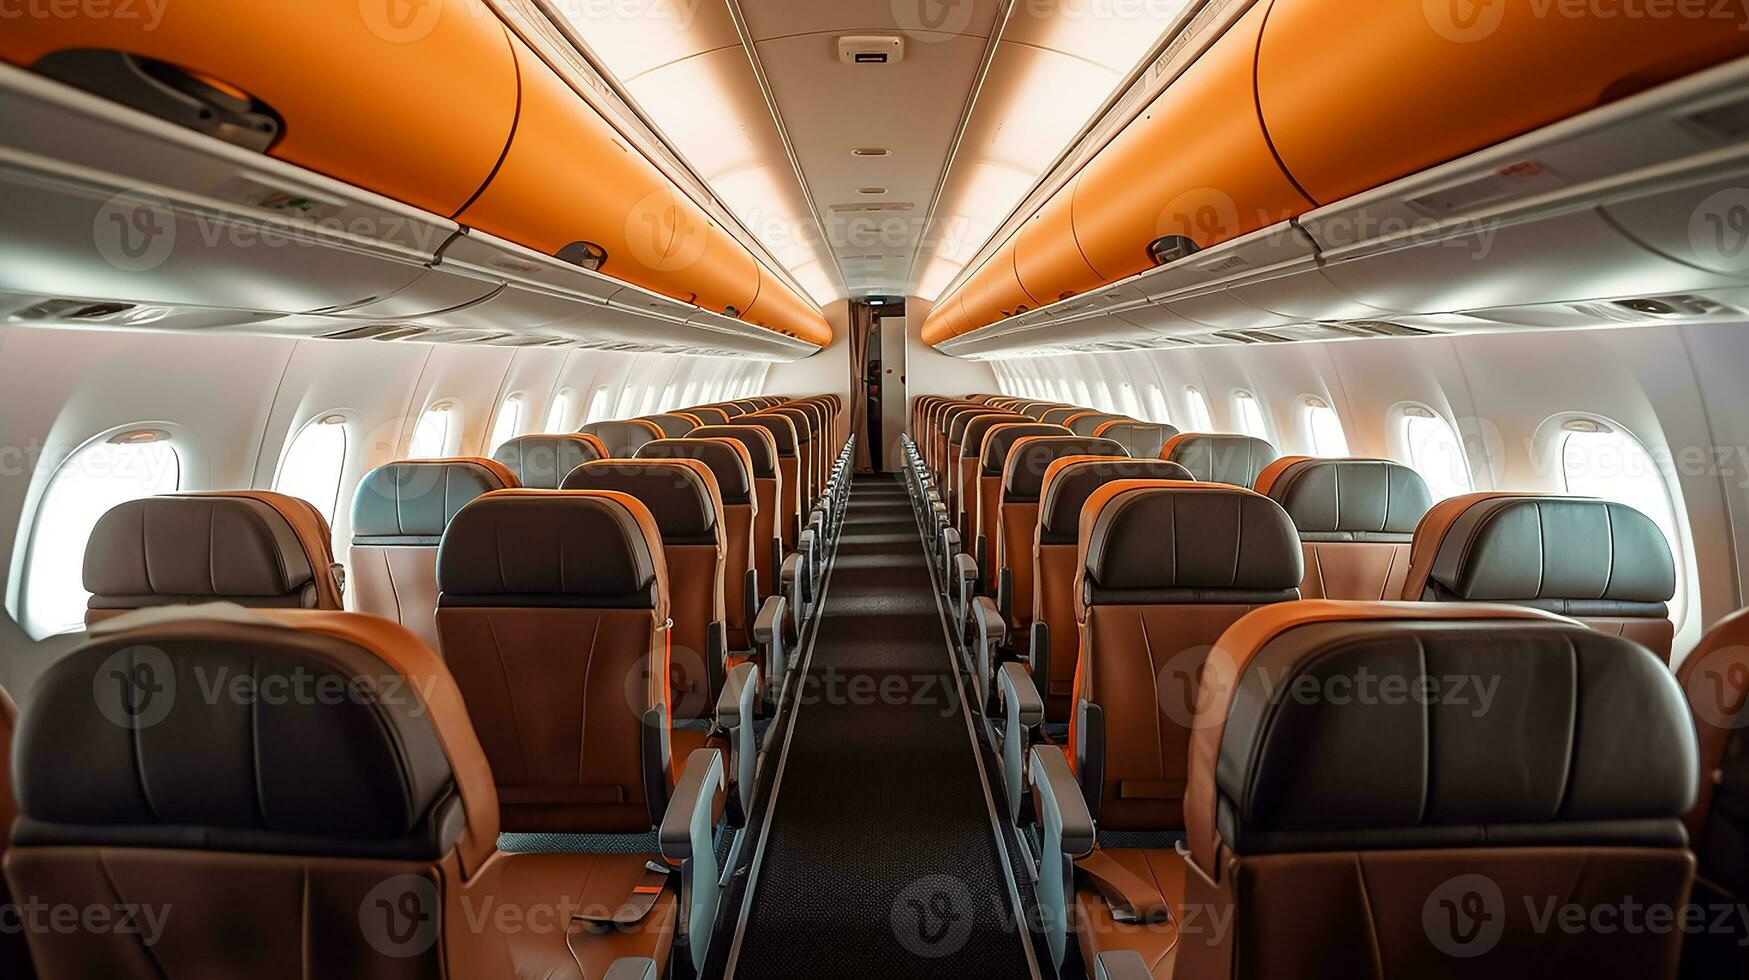 AI generated empty airplane interior view photo